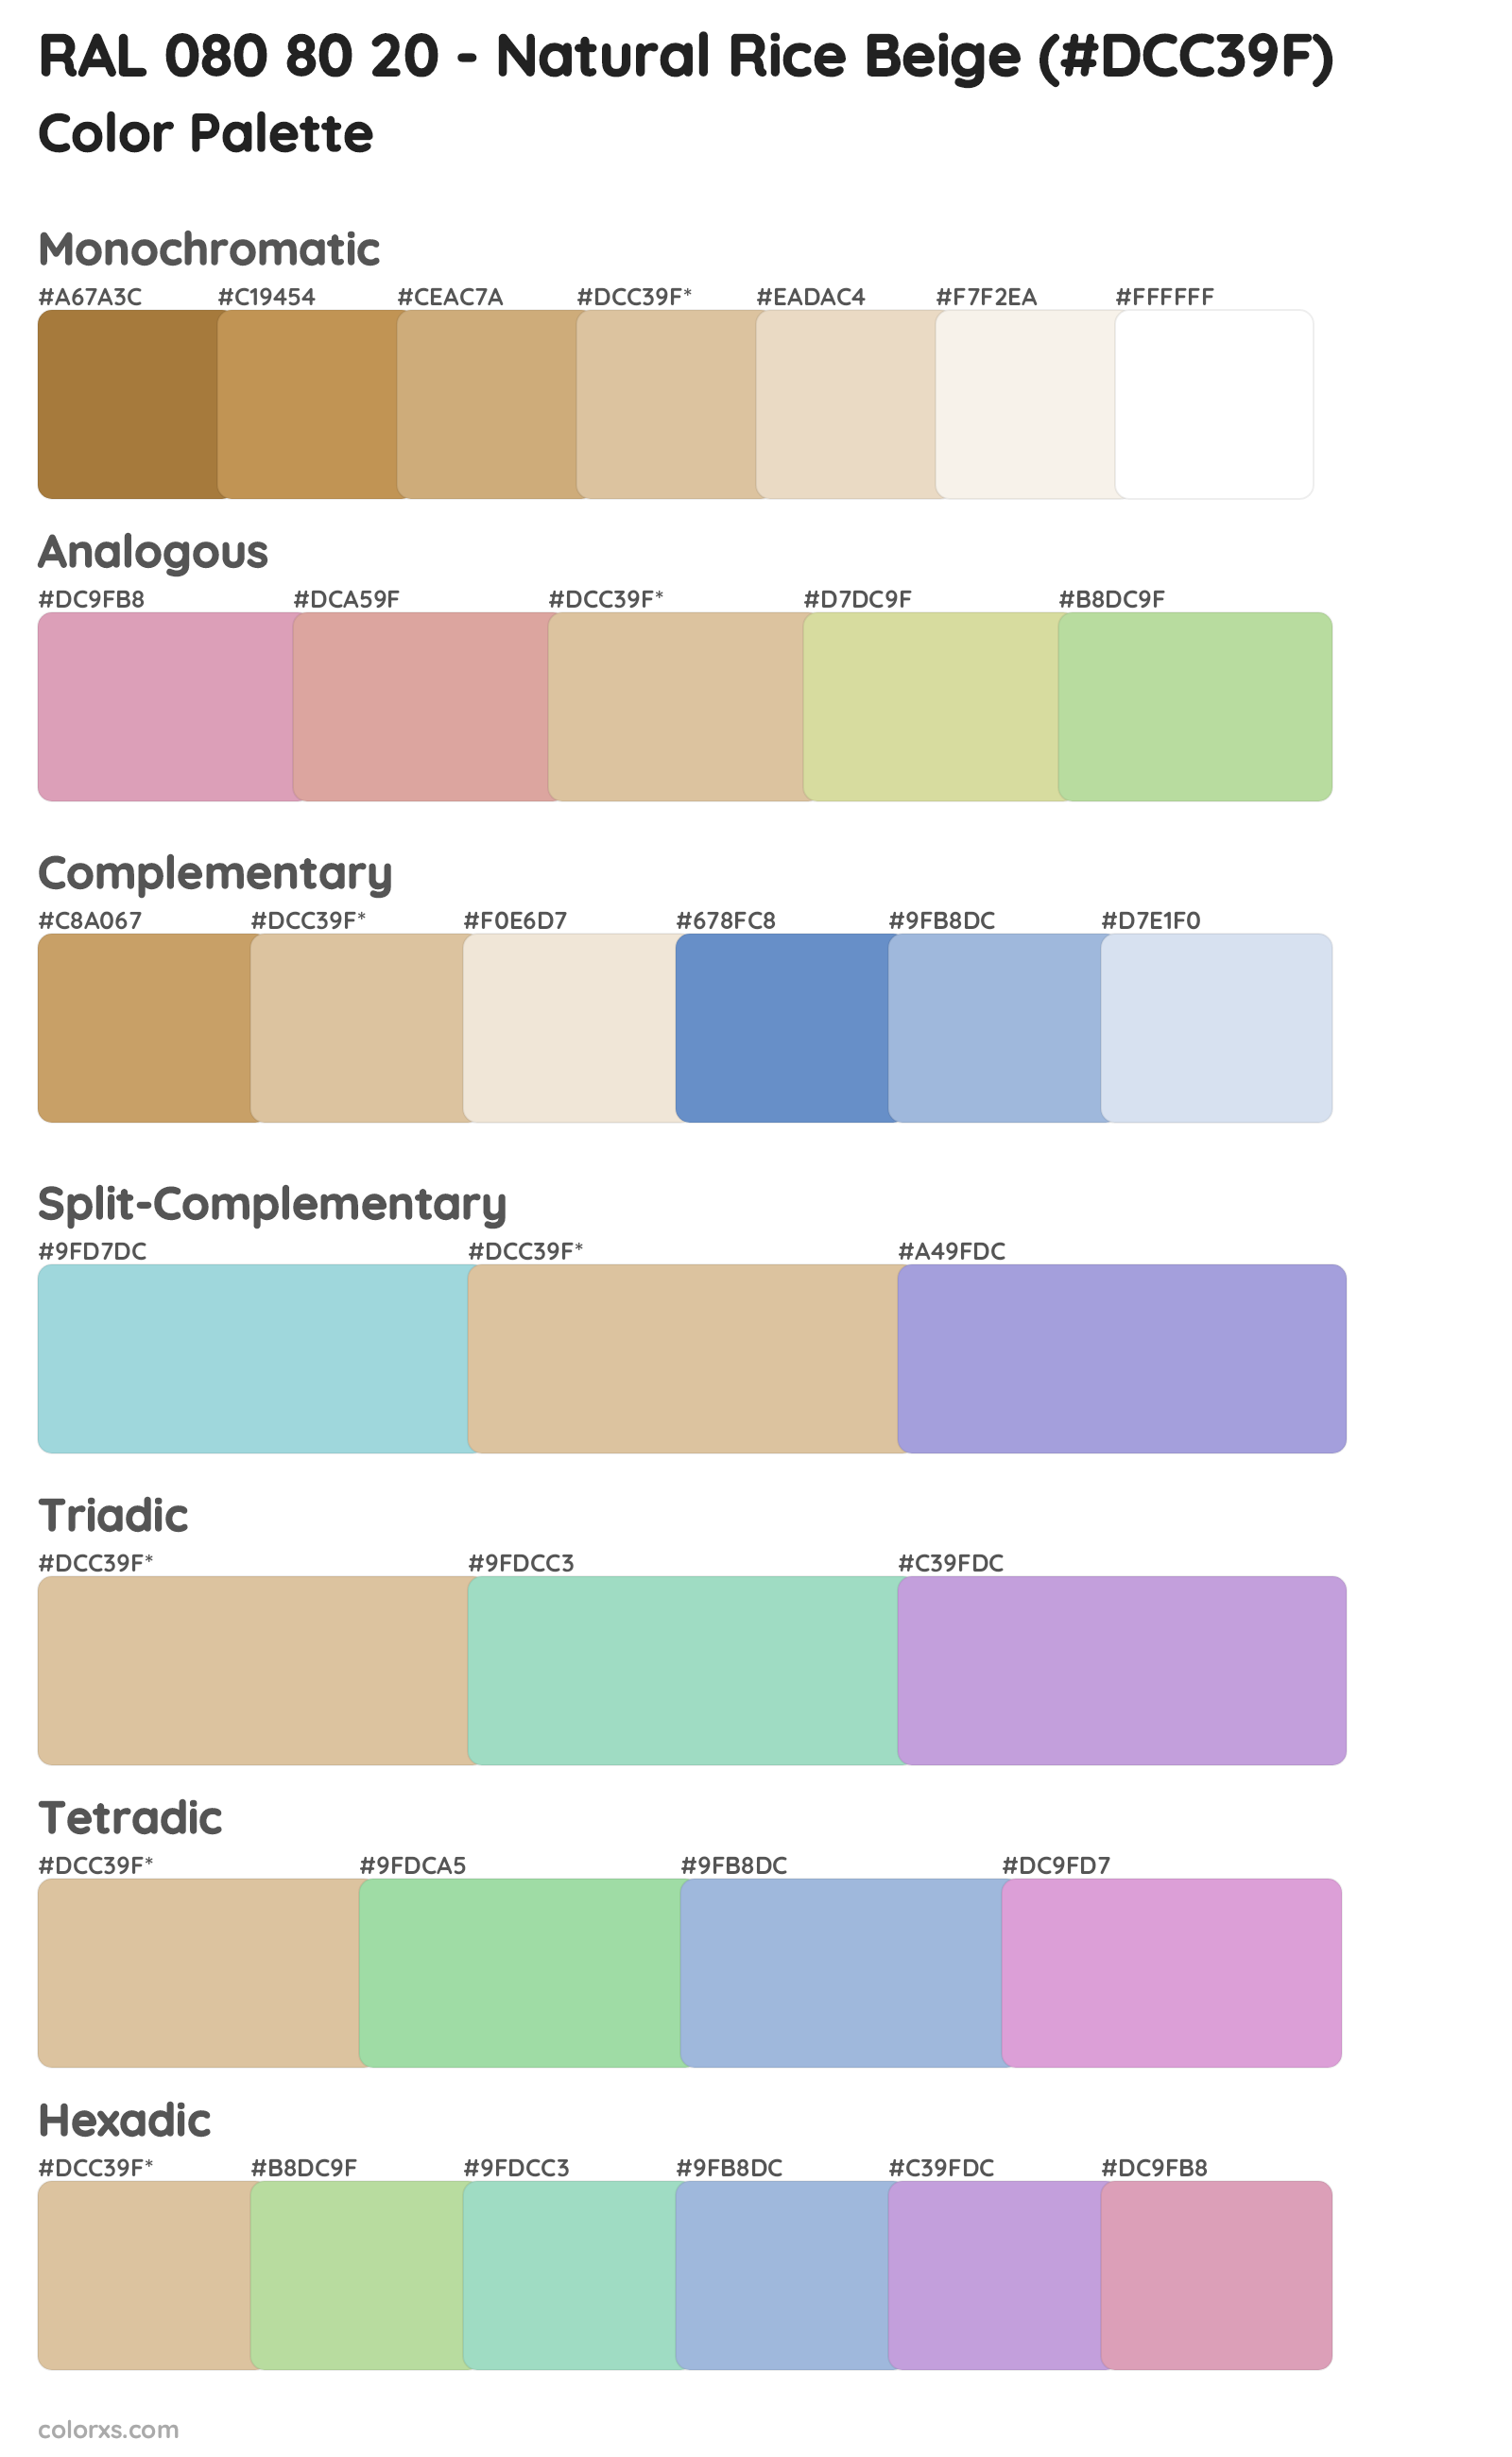 RAL 080 80 20 - Natural Rice Beige Color Scheme Palettes